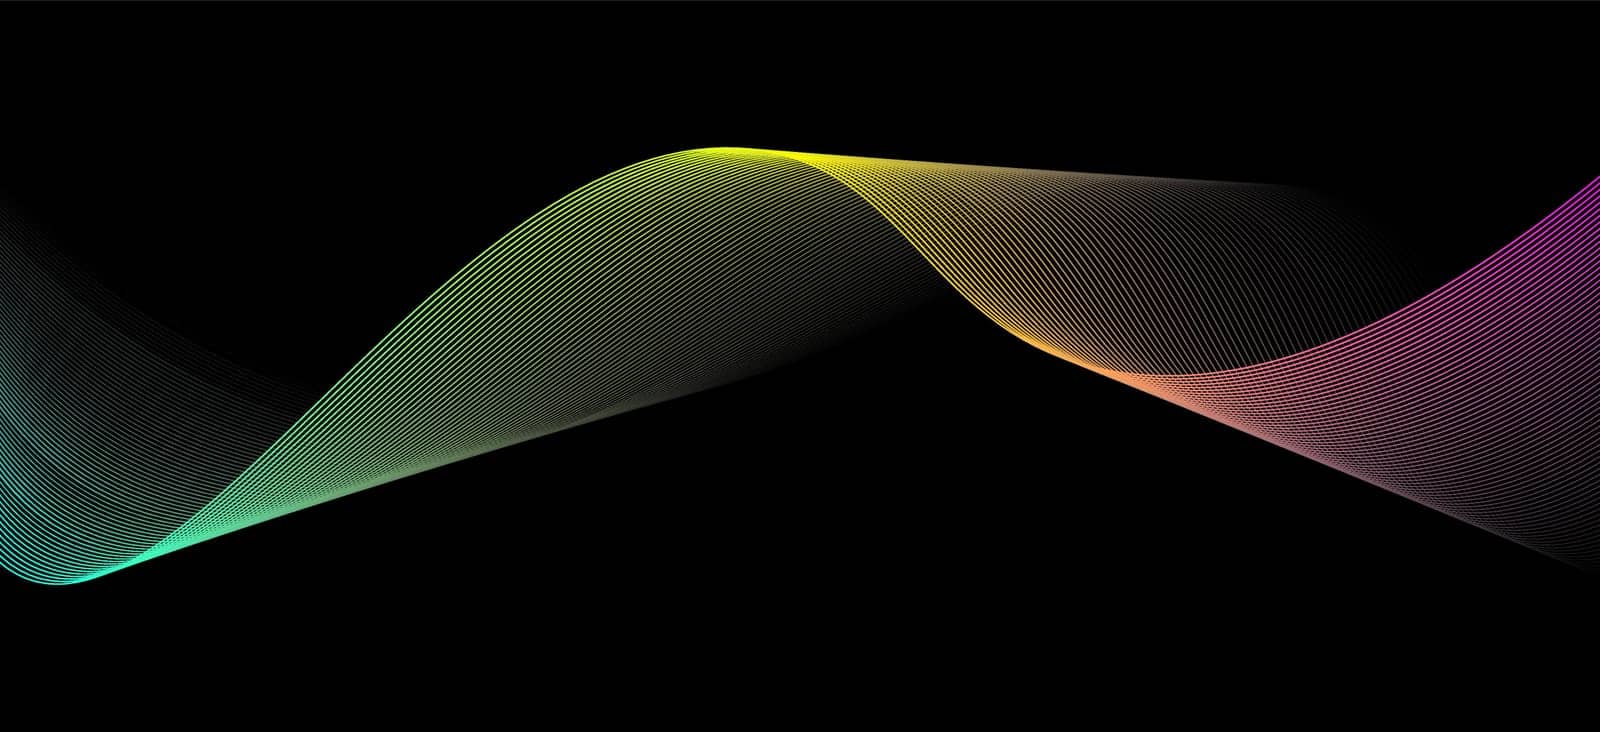 colorful motion sound wave on a dark background. Vector illustration